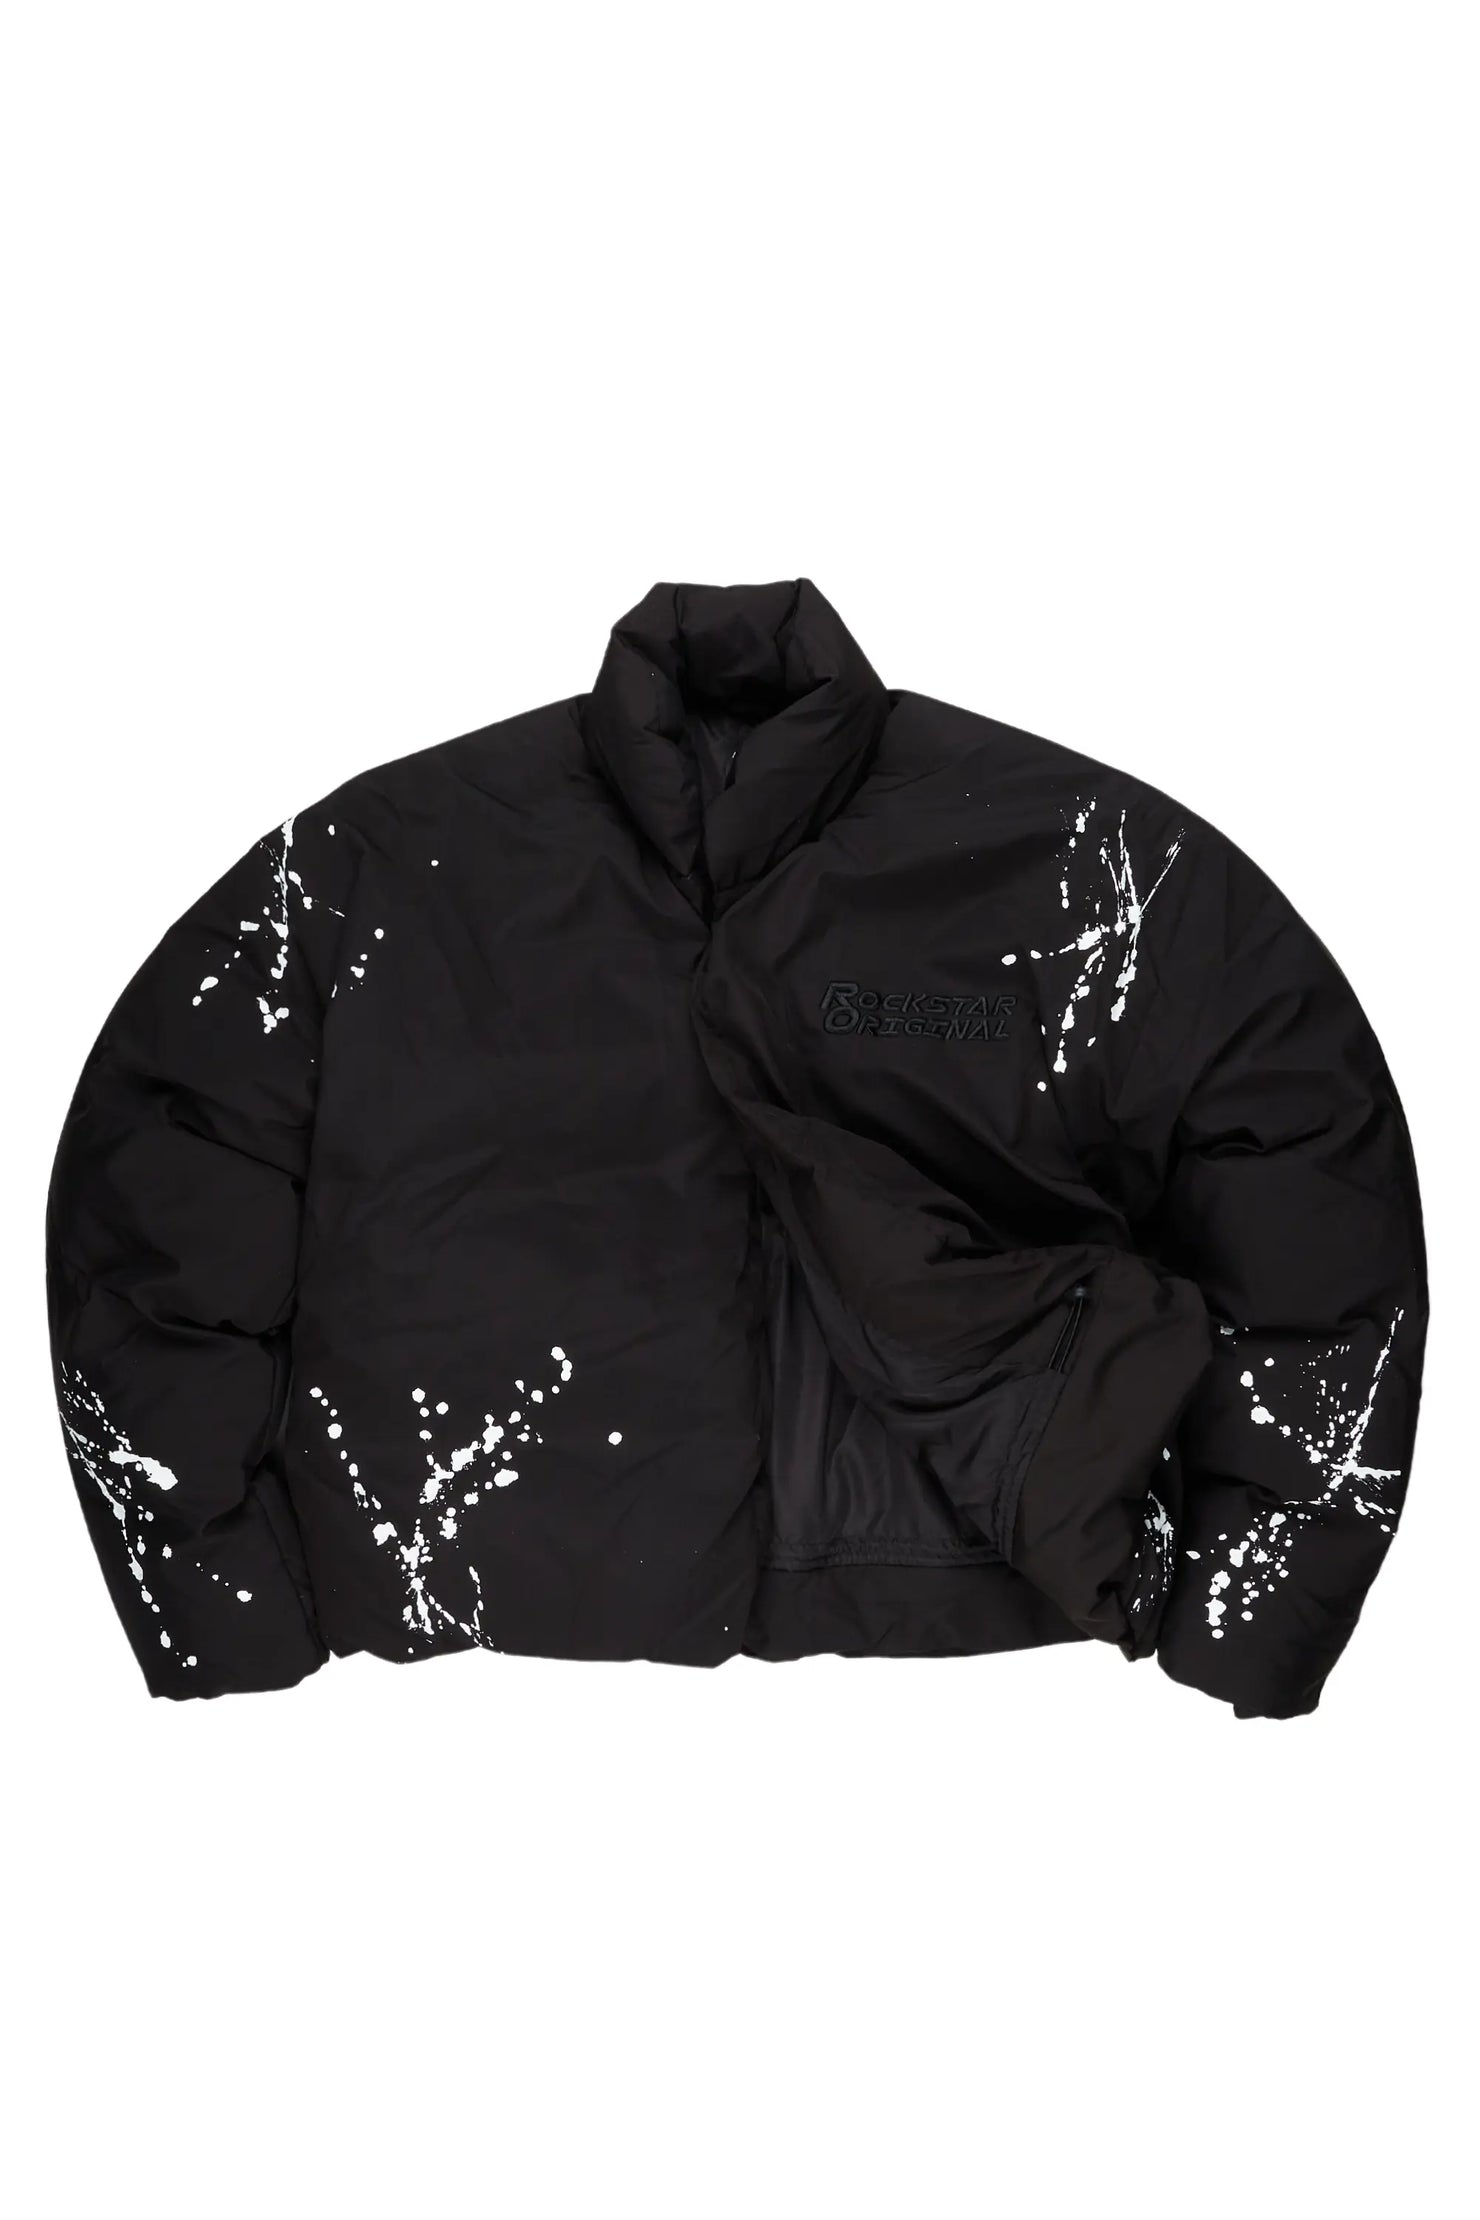 Rabbie Black/White Puffer Jacket